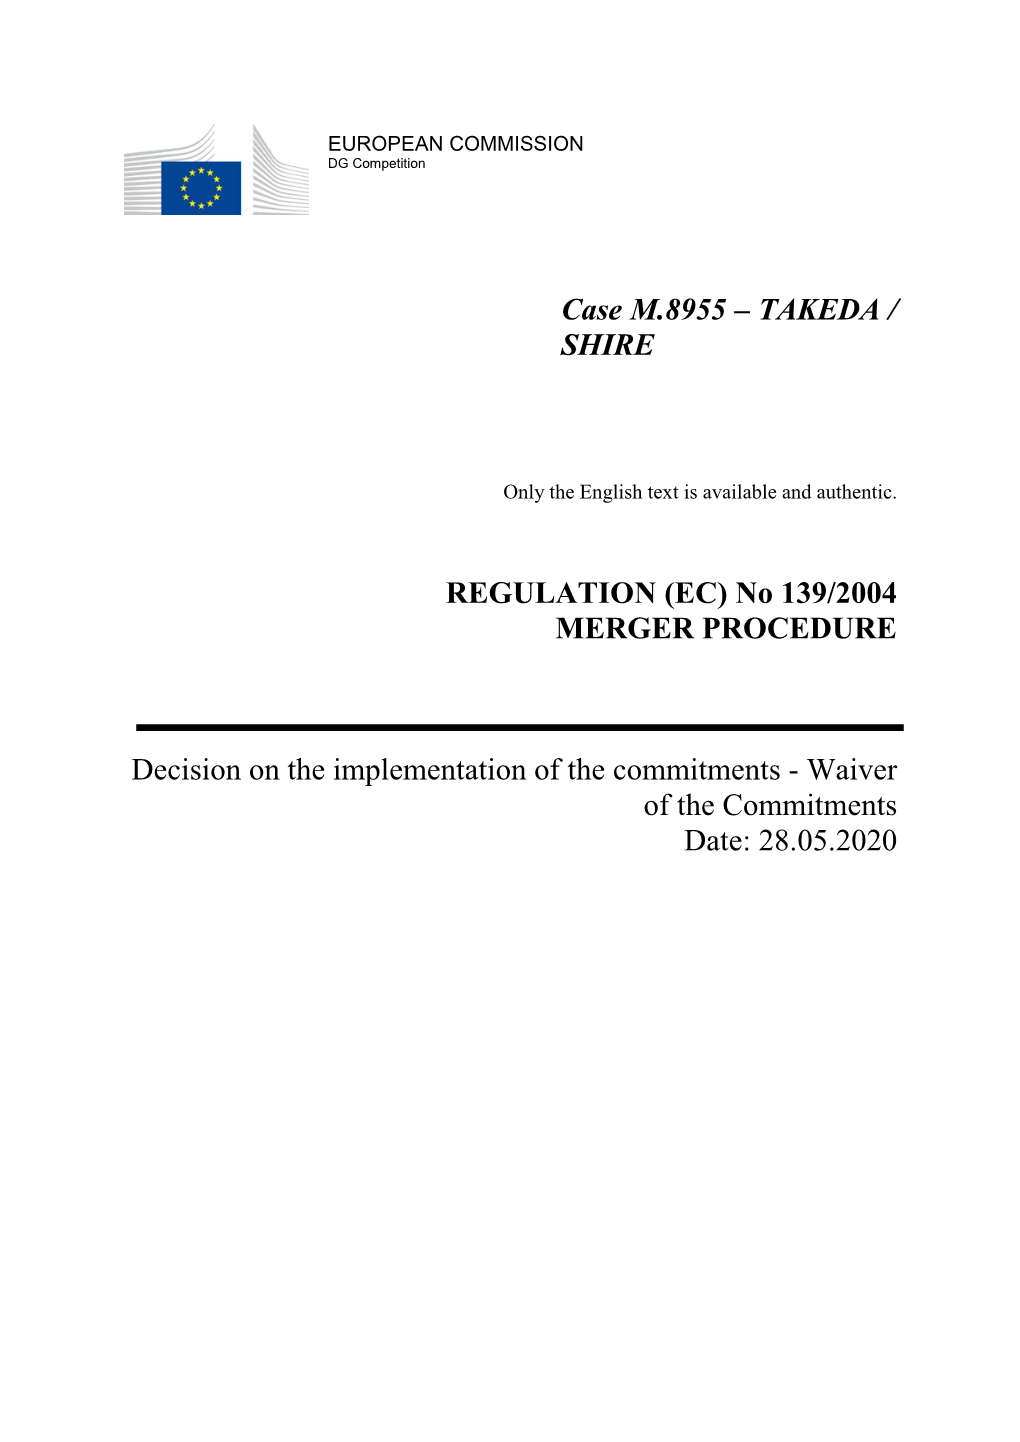 Case M.8955 – TAKEDA / SHIRE REGULATION